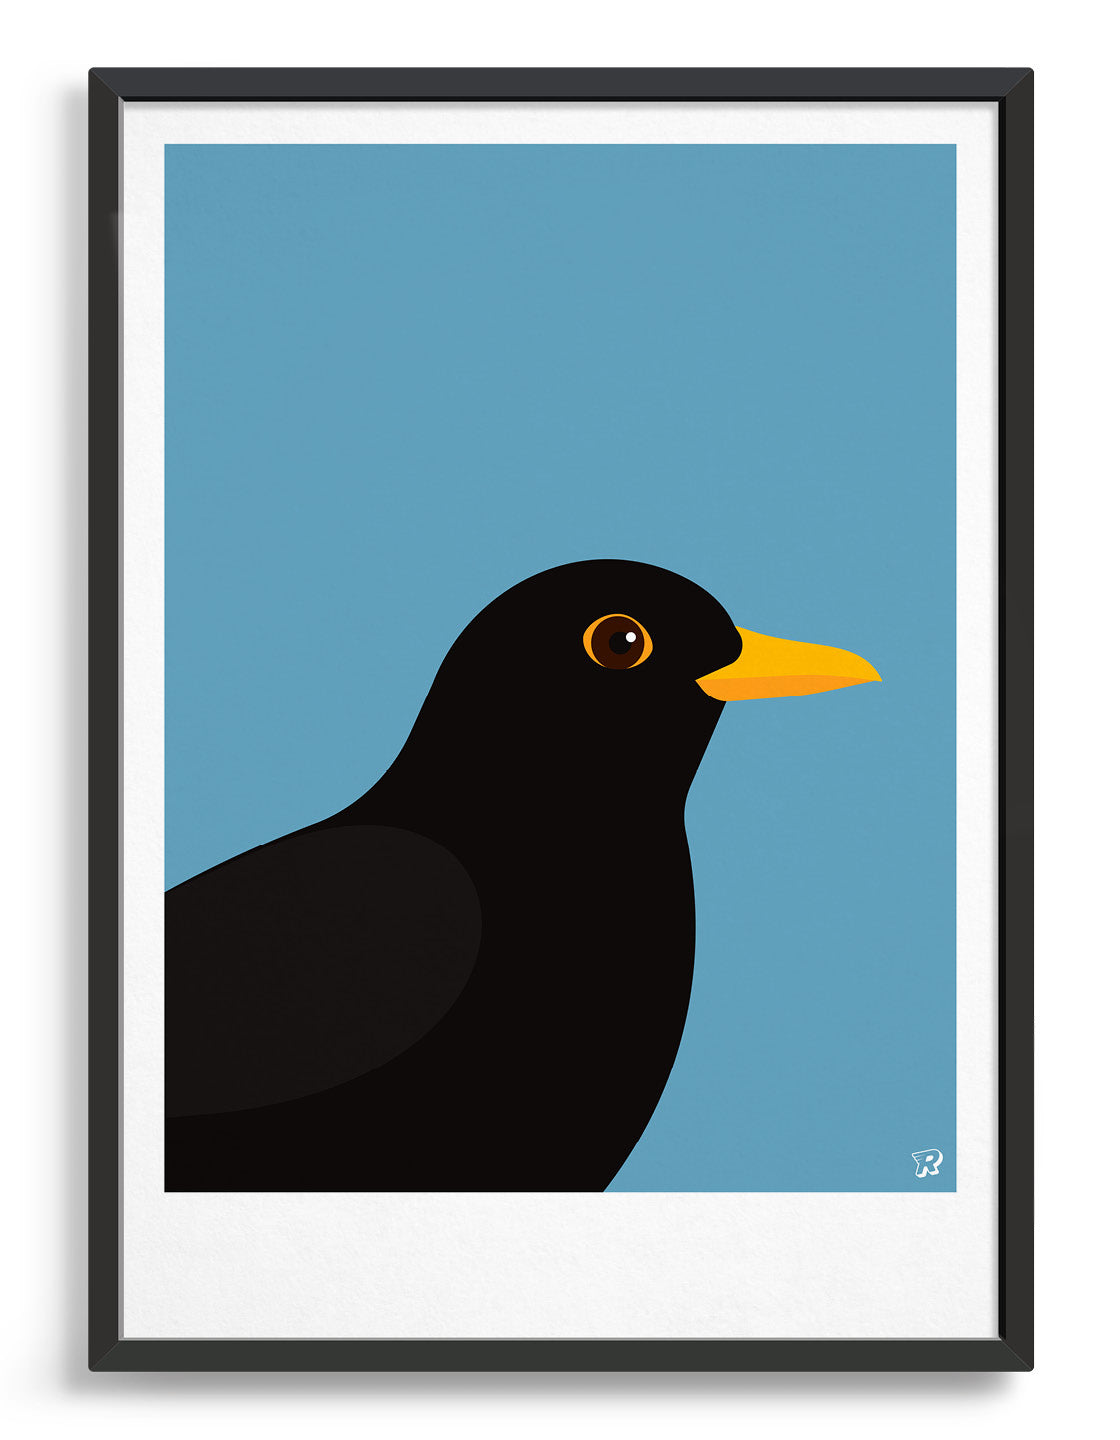 modern Blackbird illustration against a sky blue background